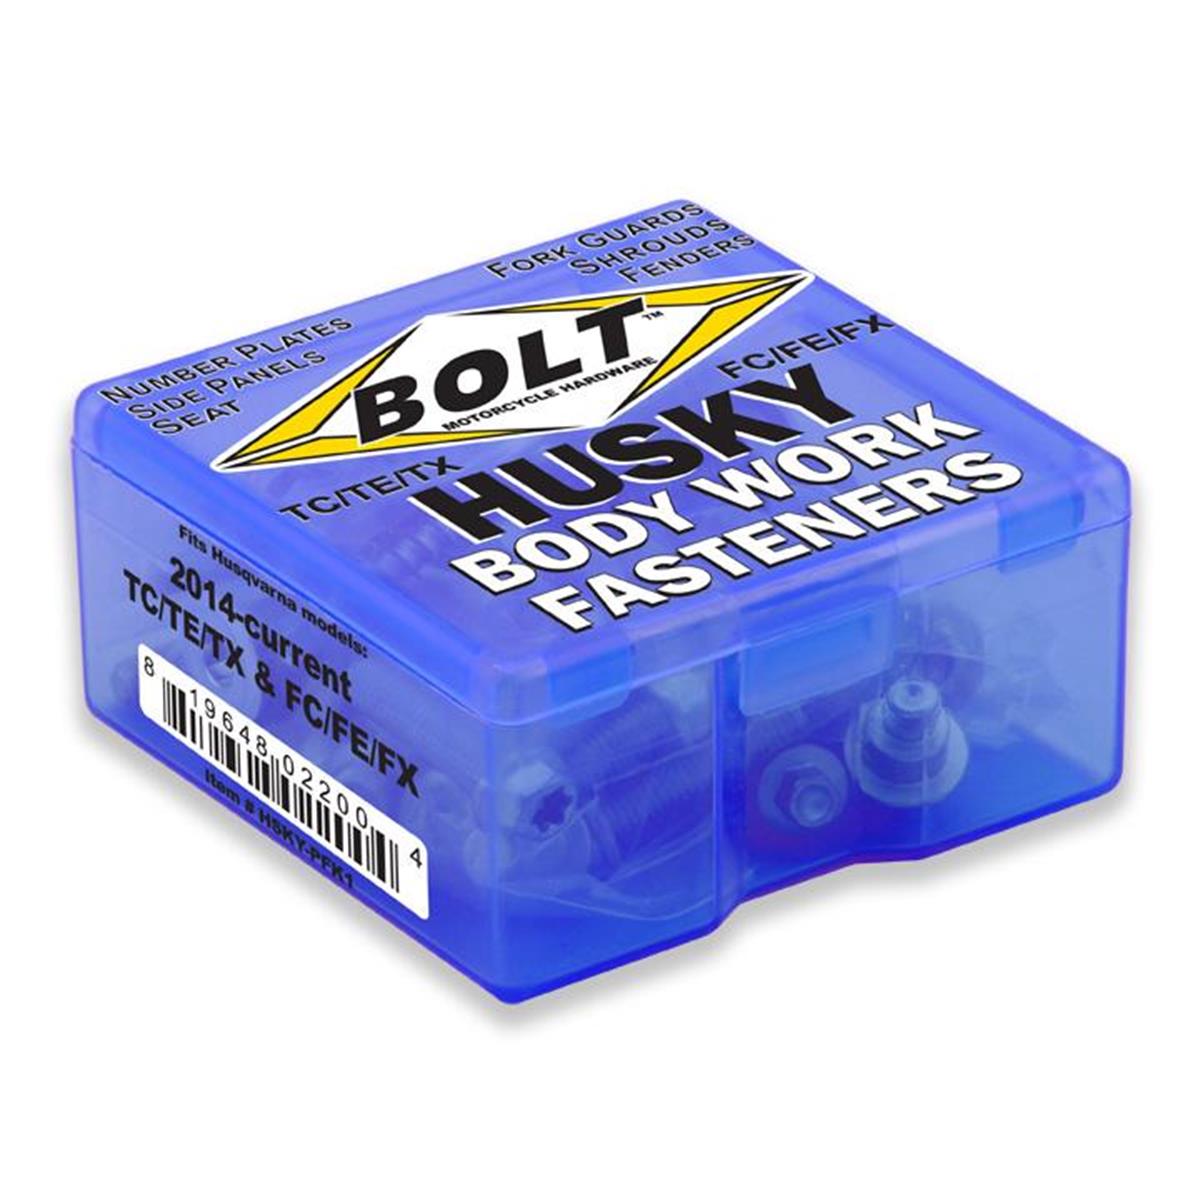 Bolt Kit de Vis  for Plastics, Husqvarna 14-